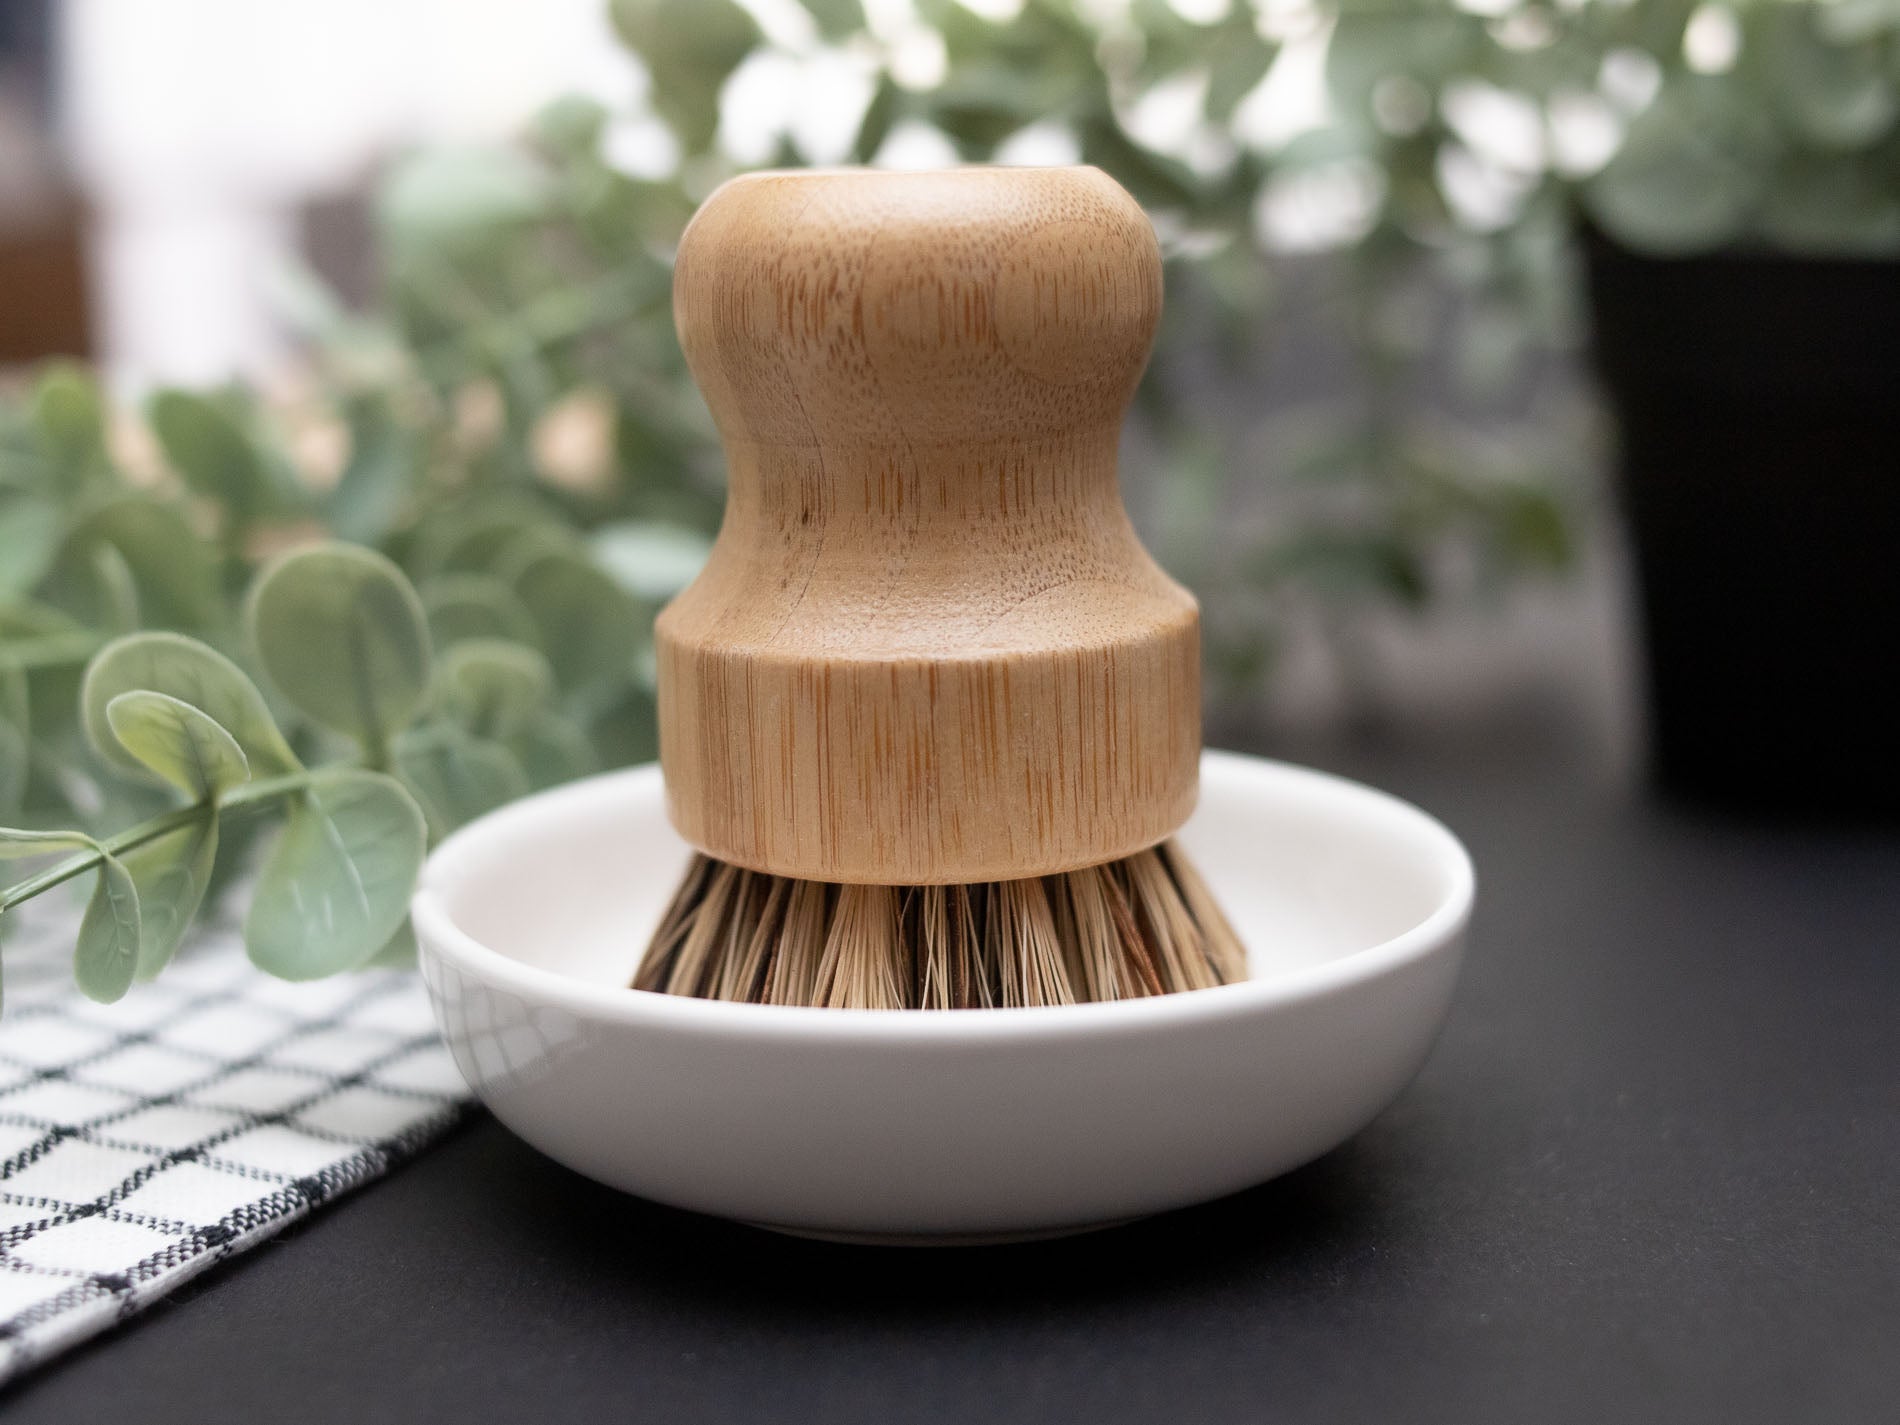 Buy Wholesale Taiwan Kitchen Dish Scrub Brush With Transparent